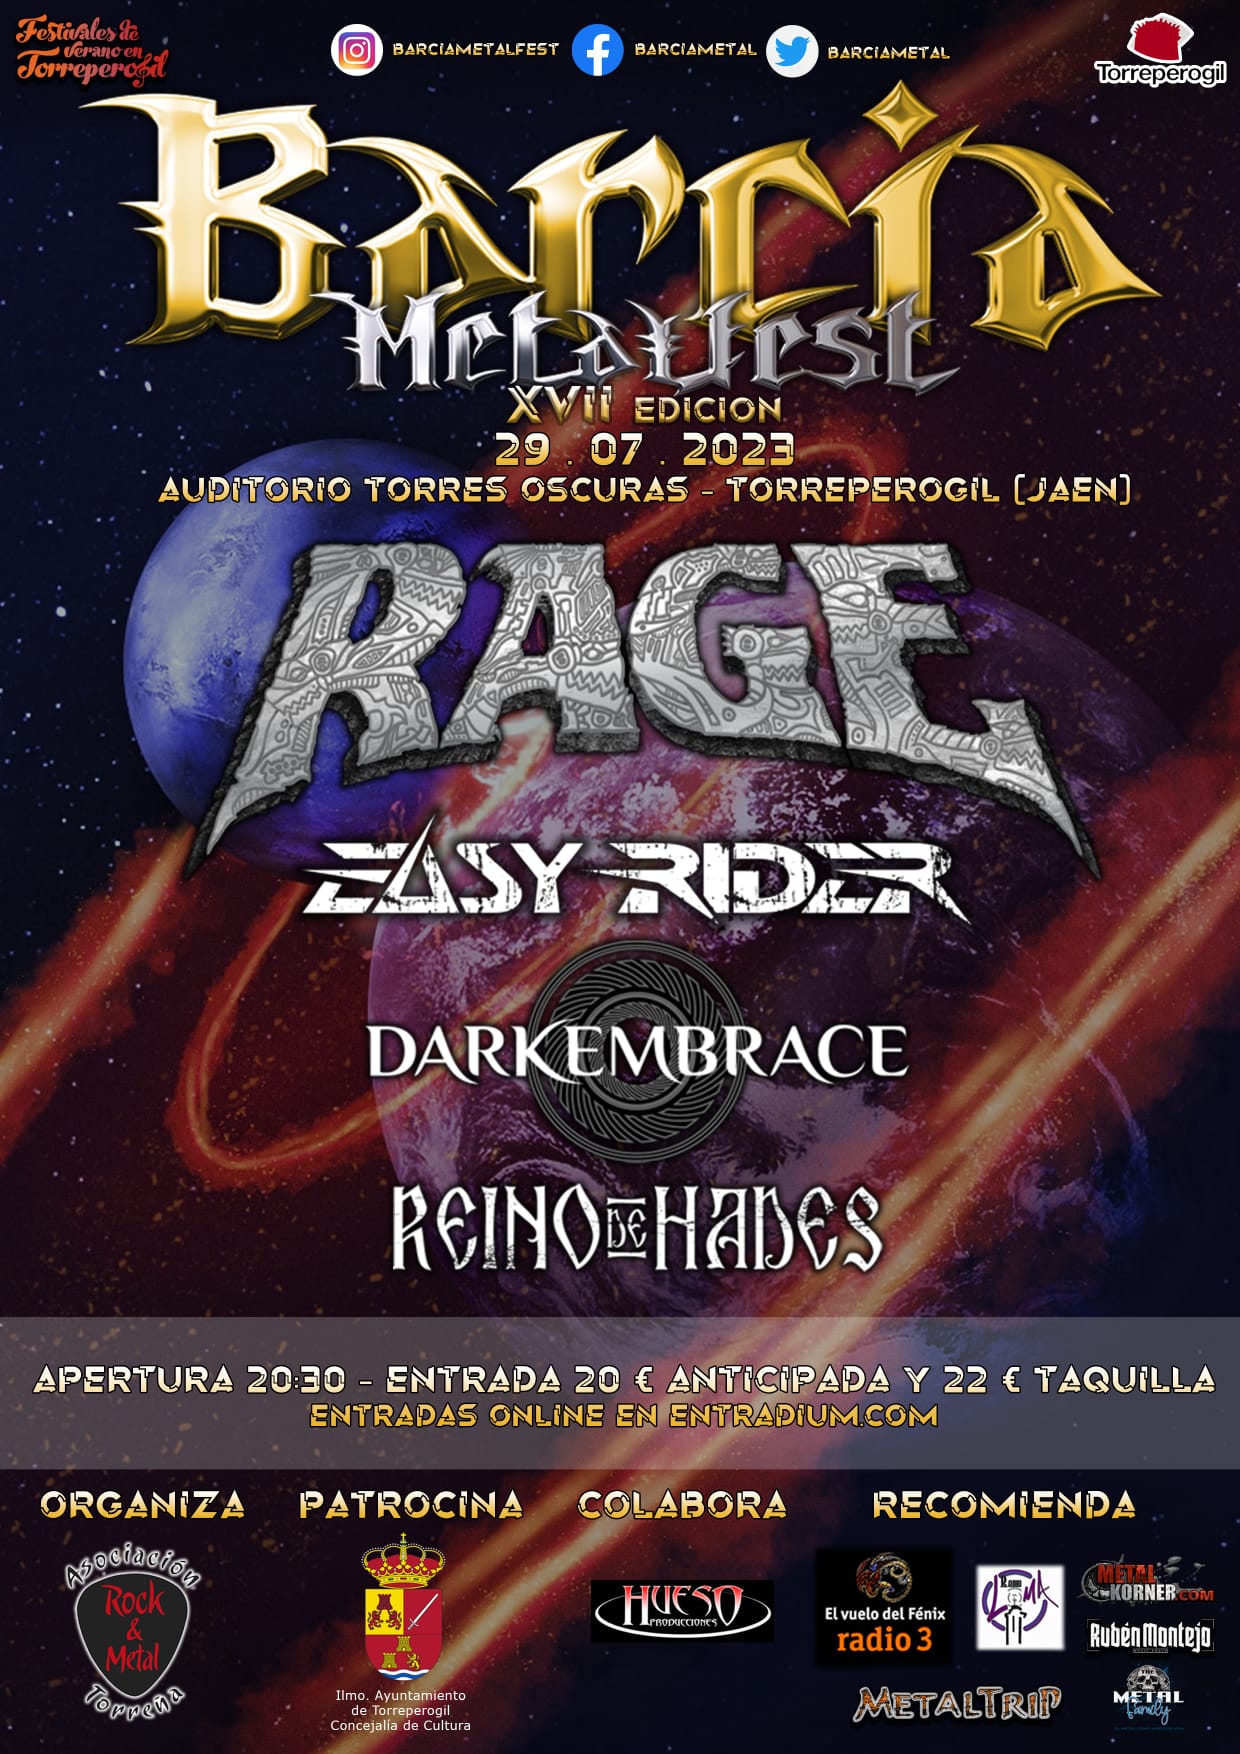 Barcia Metalfest – Este sábado en Torreperogil (Jaén)